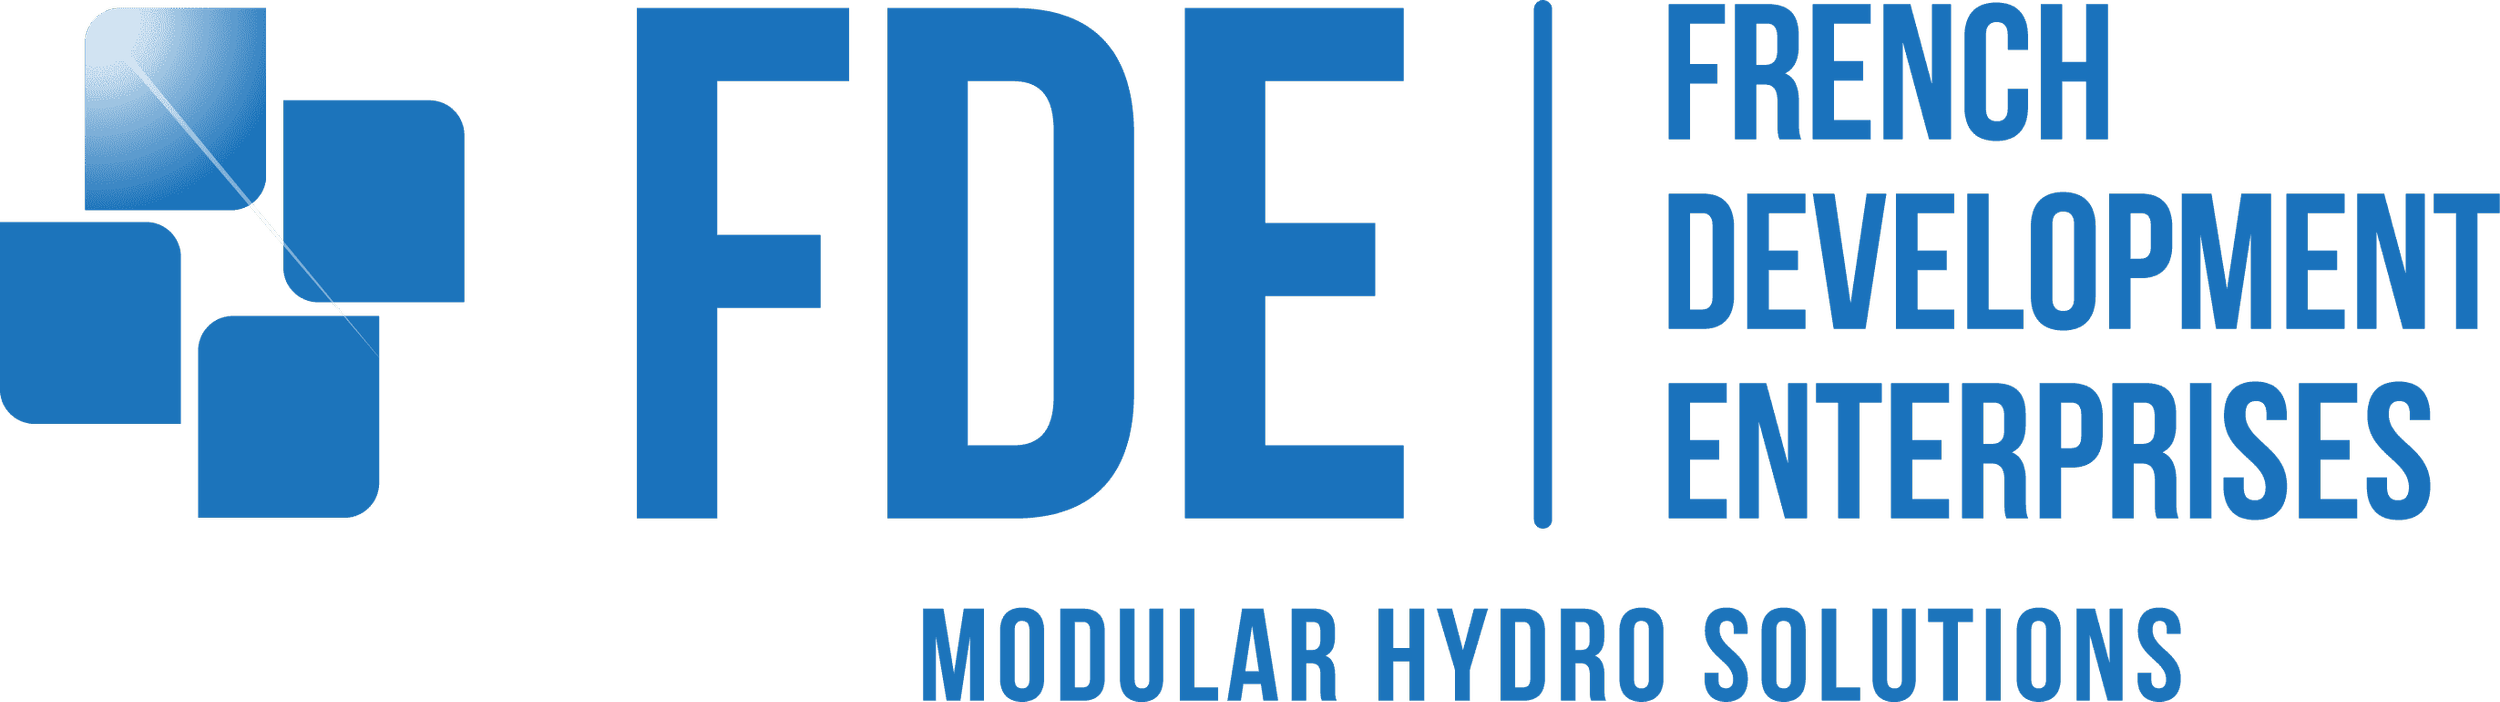 logo_FDEHydro.png